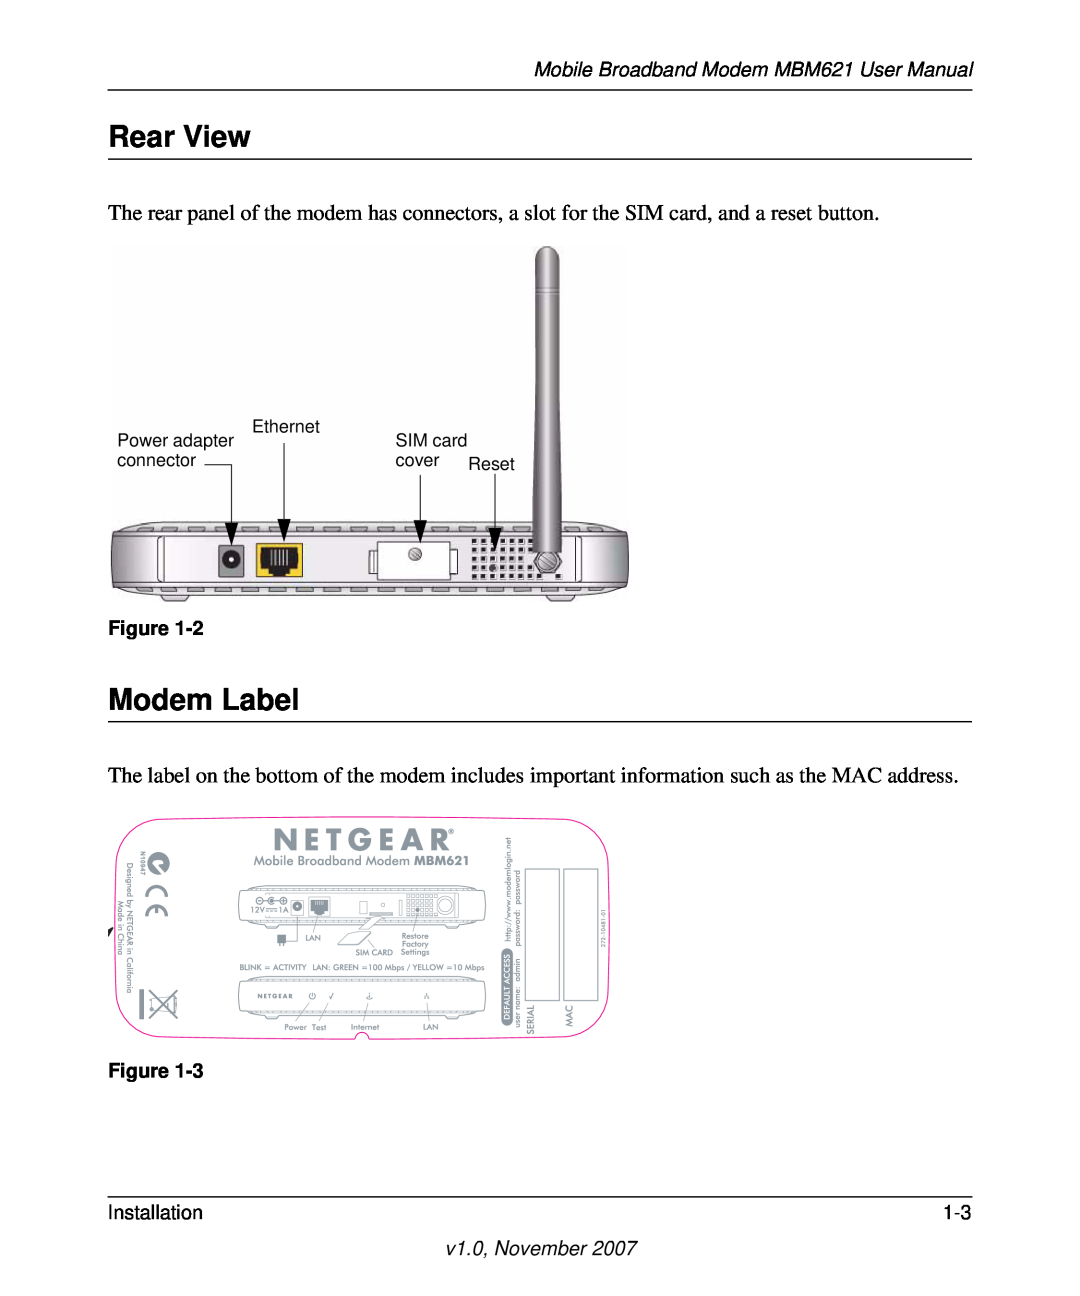 NETGEAR MBM621 user manual Rear View, Modem Label, Power adapter Ethernet, SIM card, connector, cover Reset 